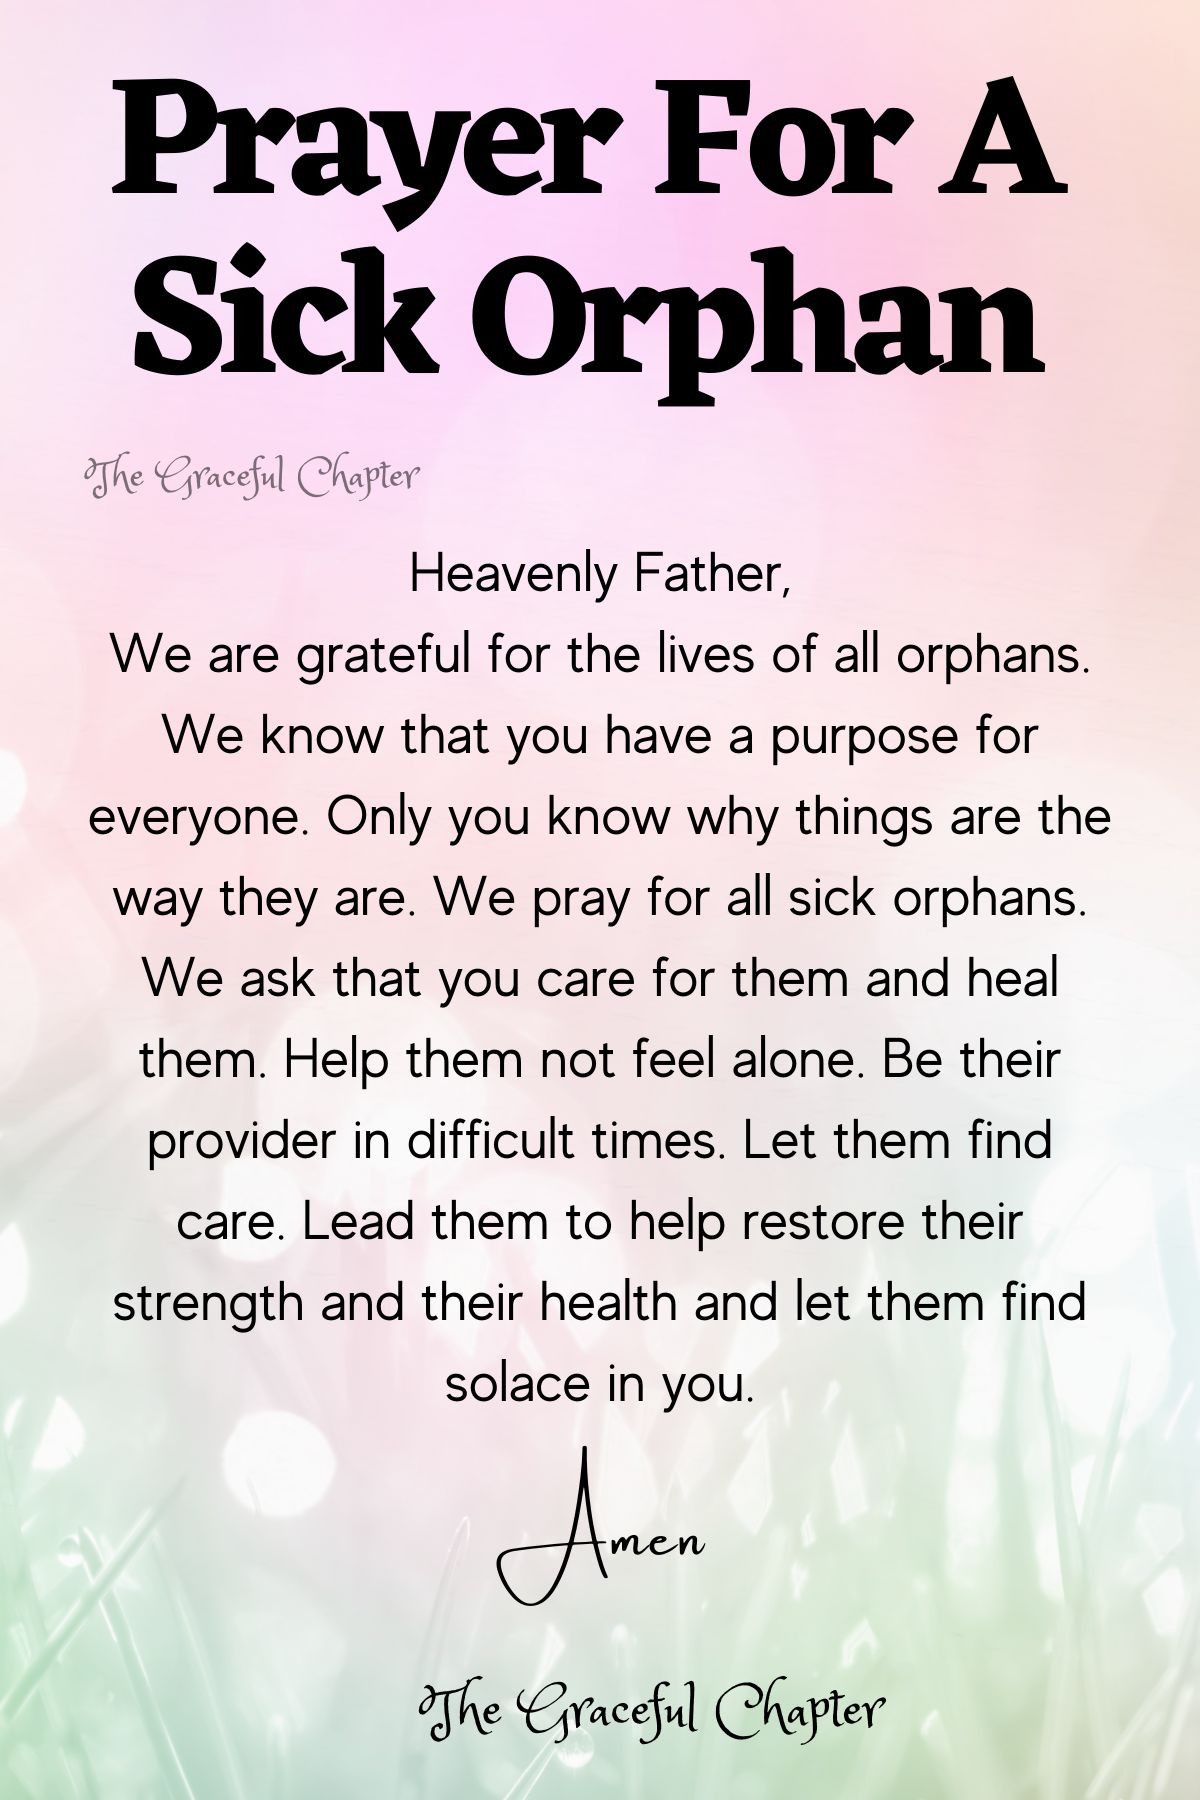 Prayer for a sick orphan